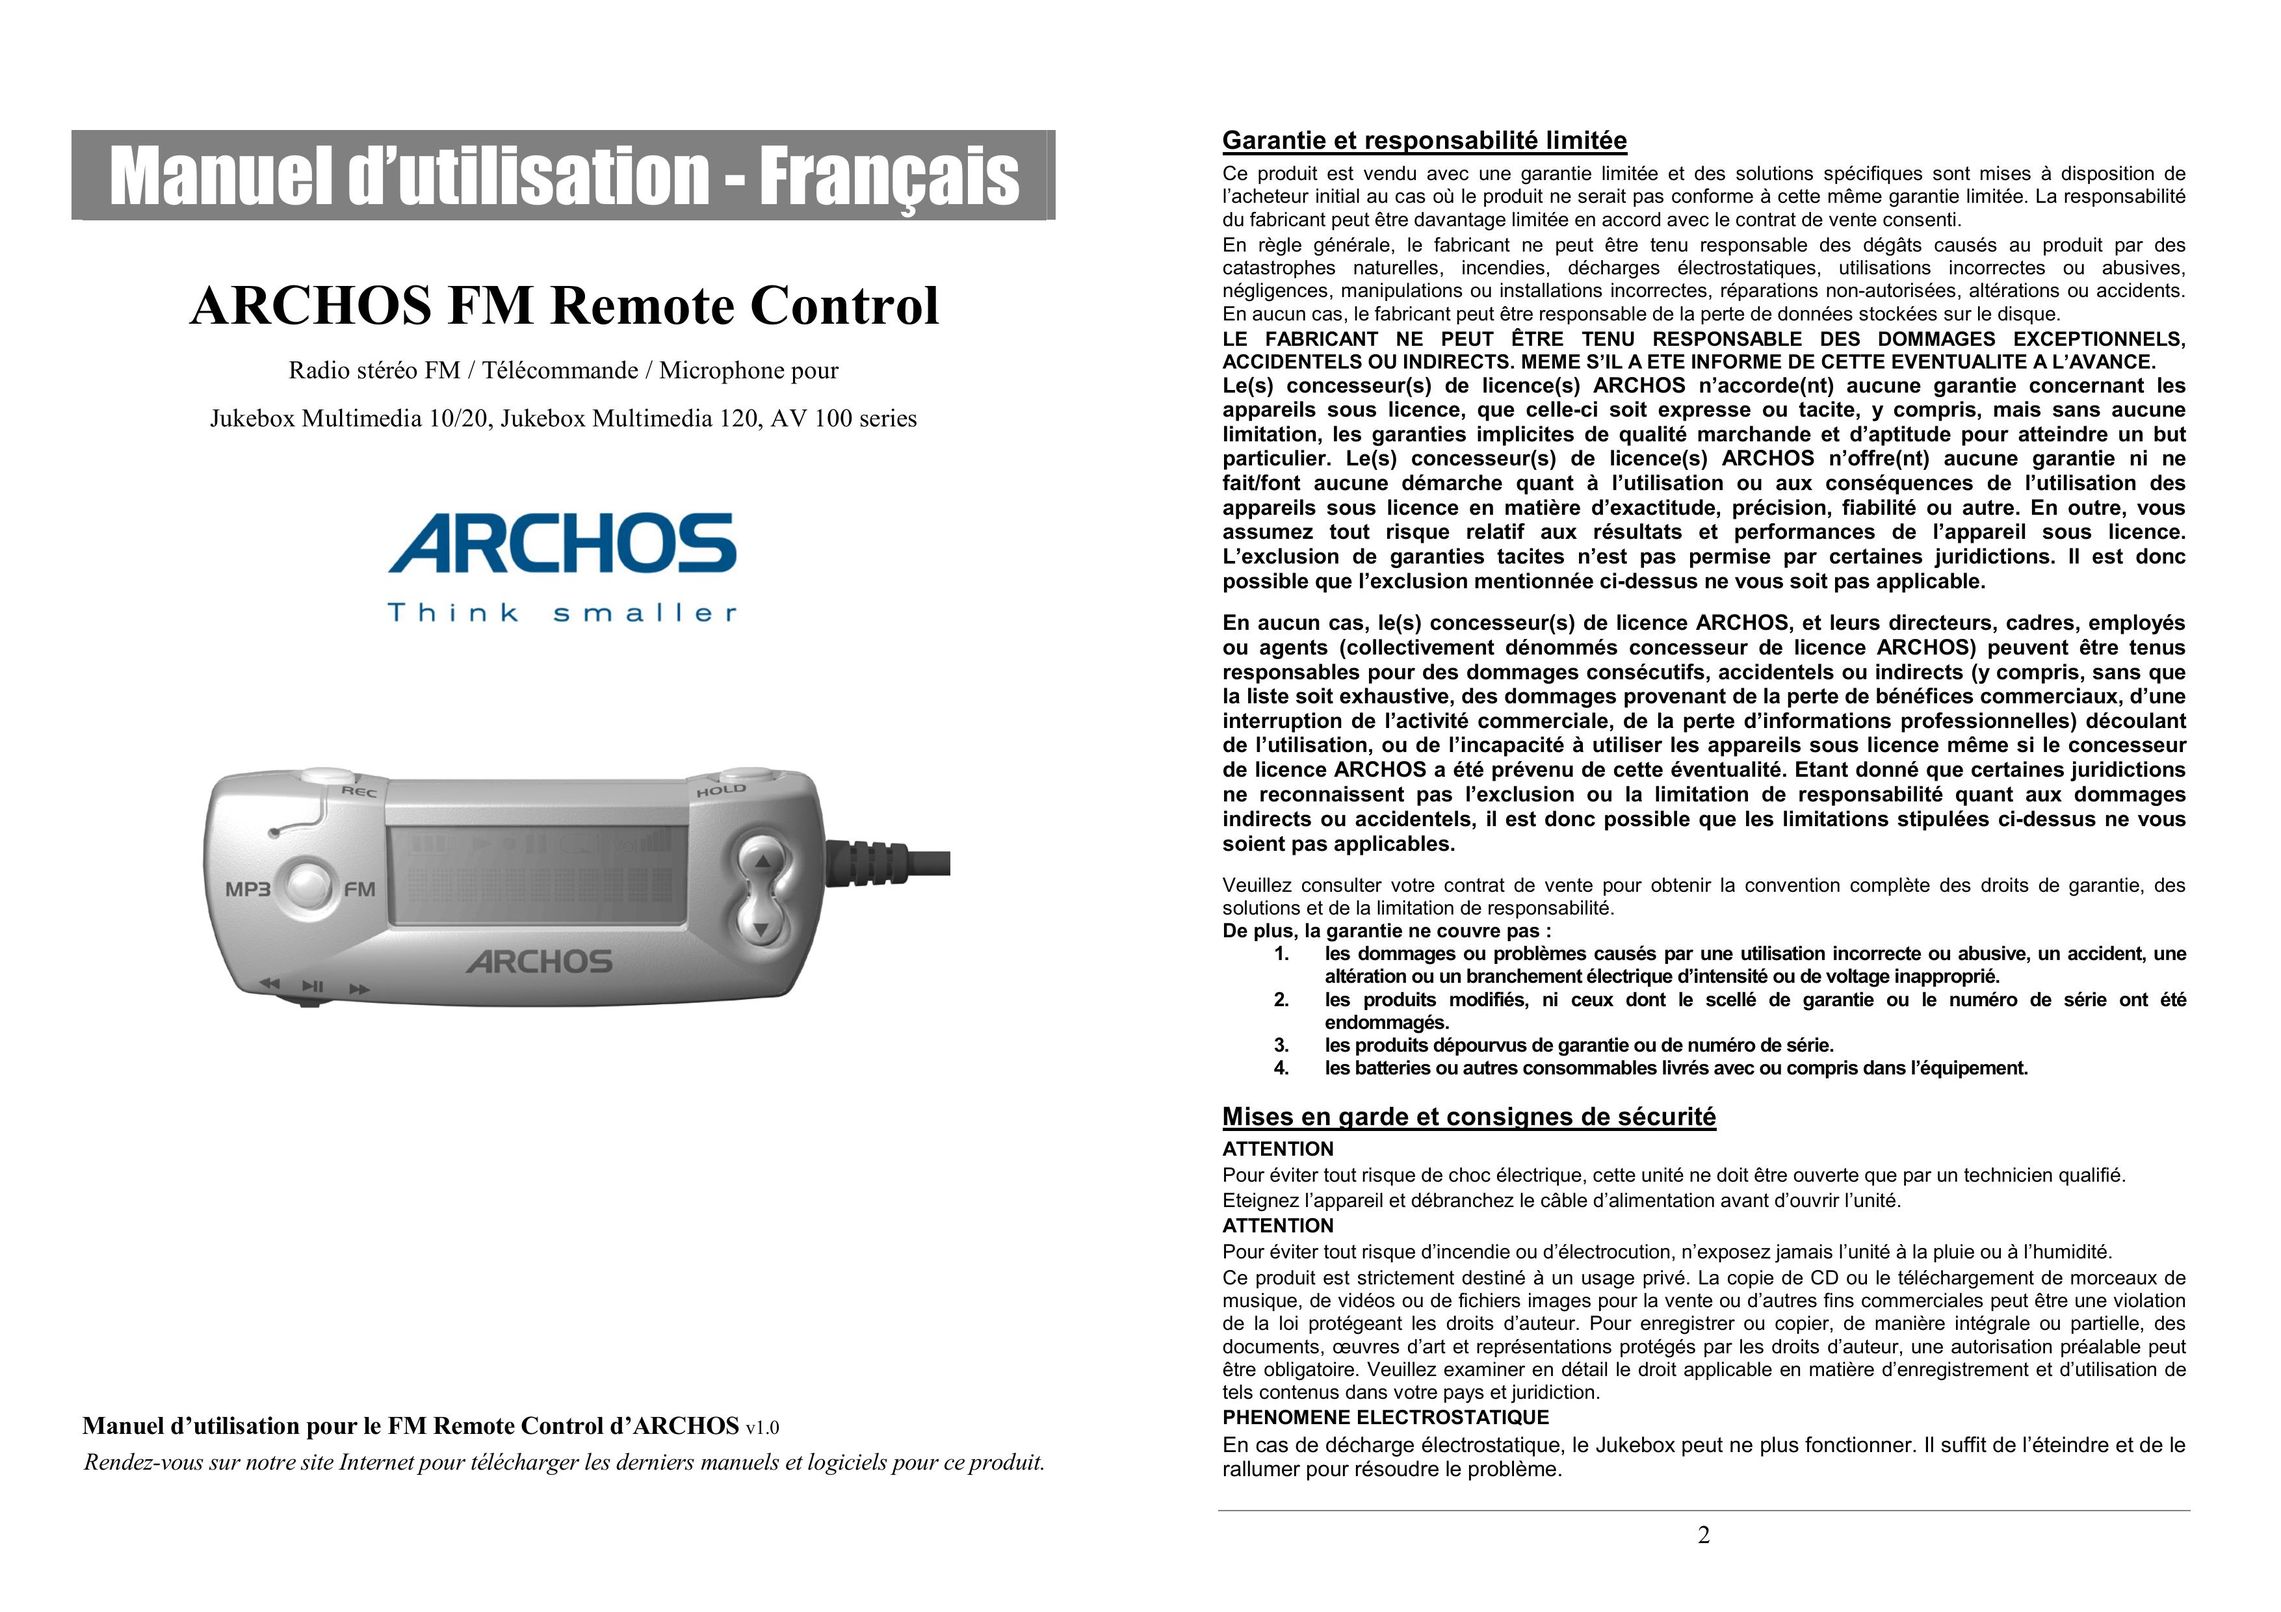 Archos FM Remote Control Universal Remote User Manual